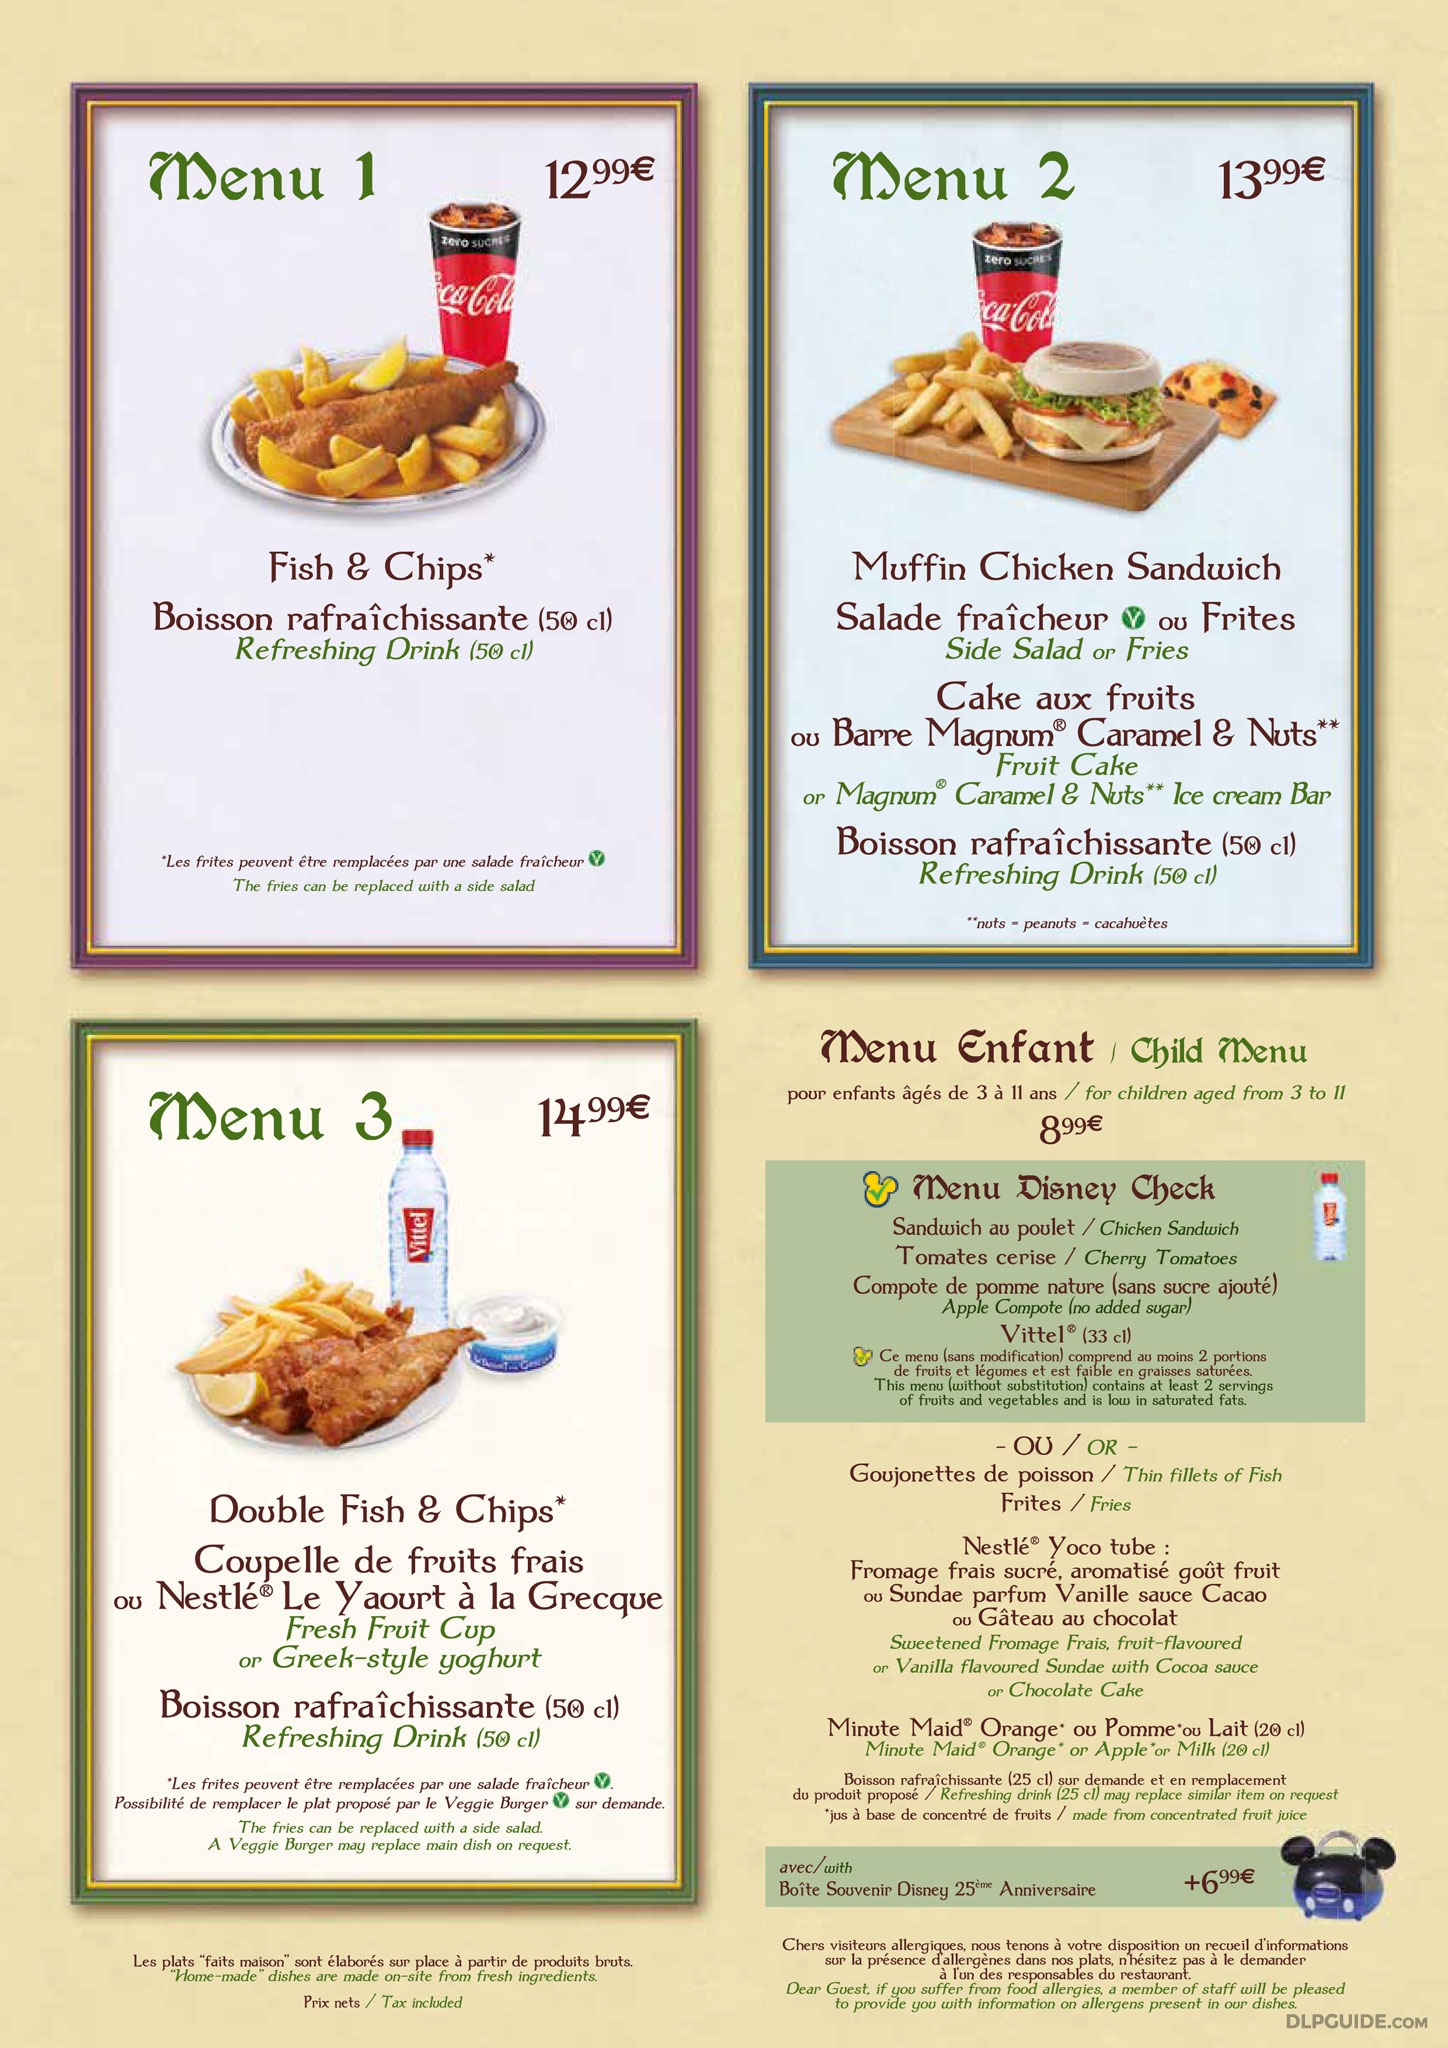 Toad Hall Restaurant menu — DLP Guide • Disneyland Paris Restaurants